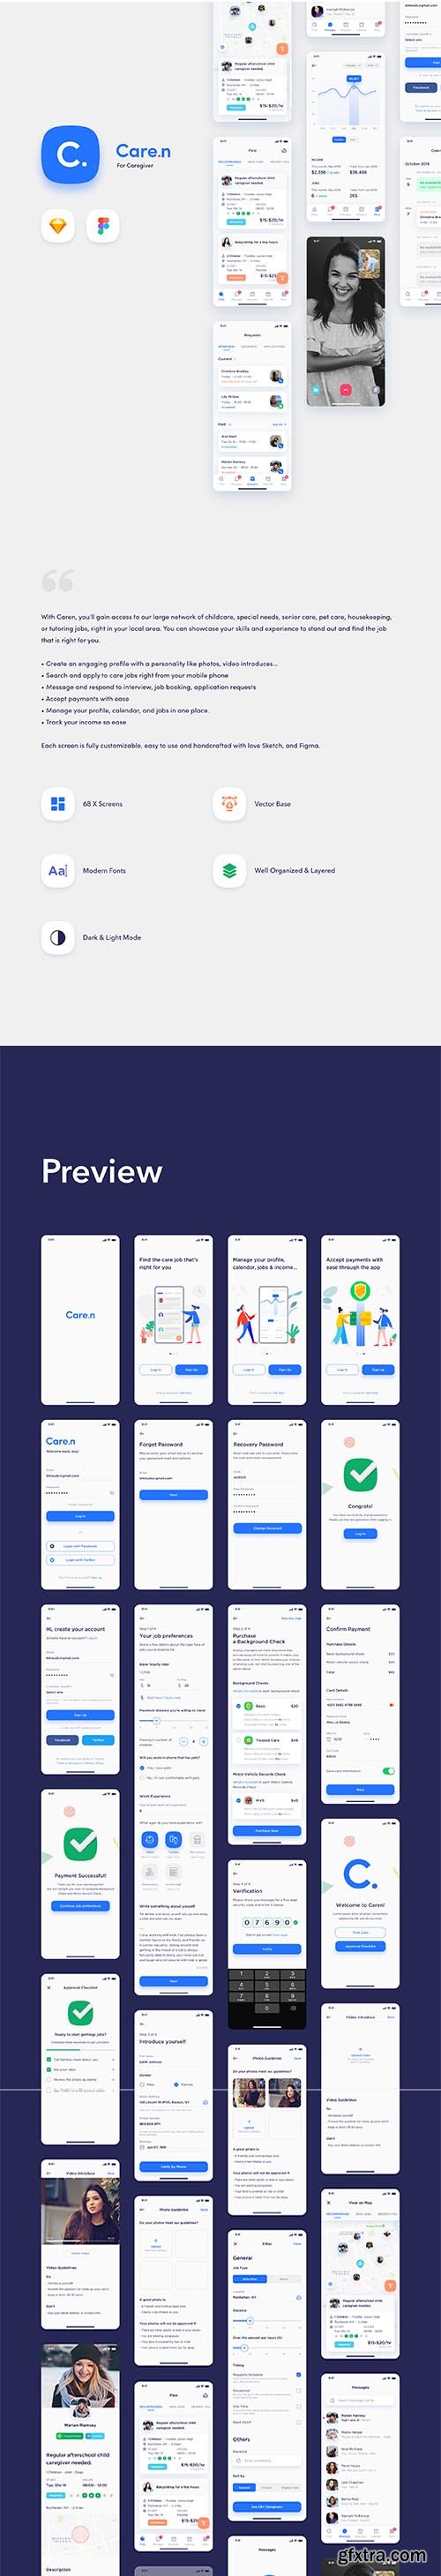 Caren - For Caregiver iOS UI Kit